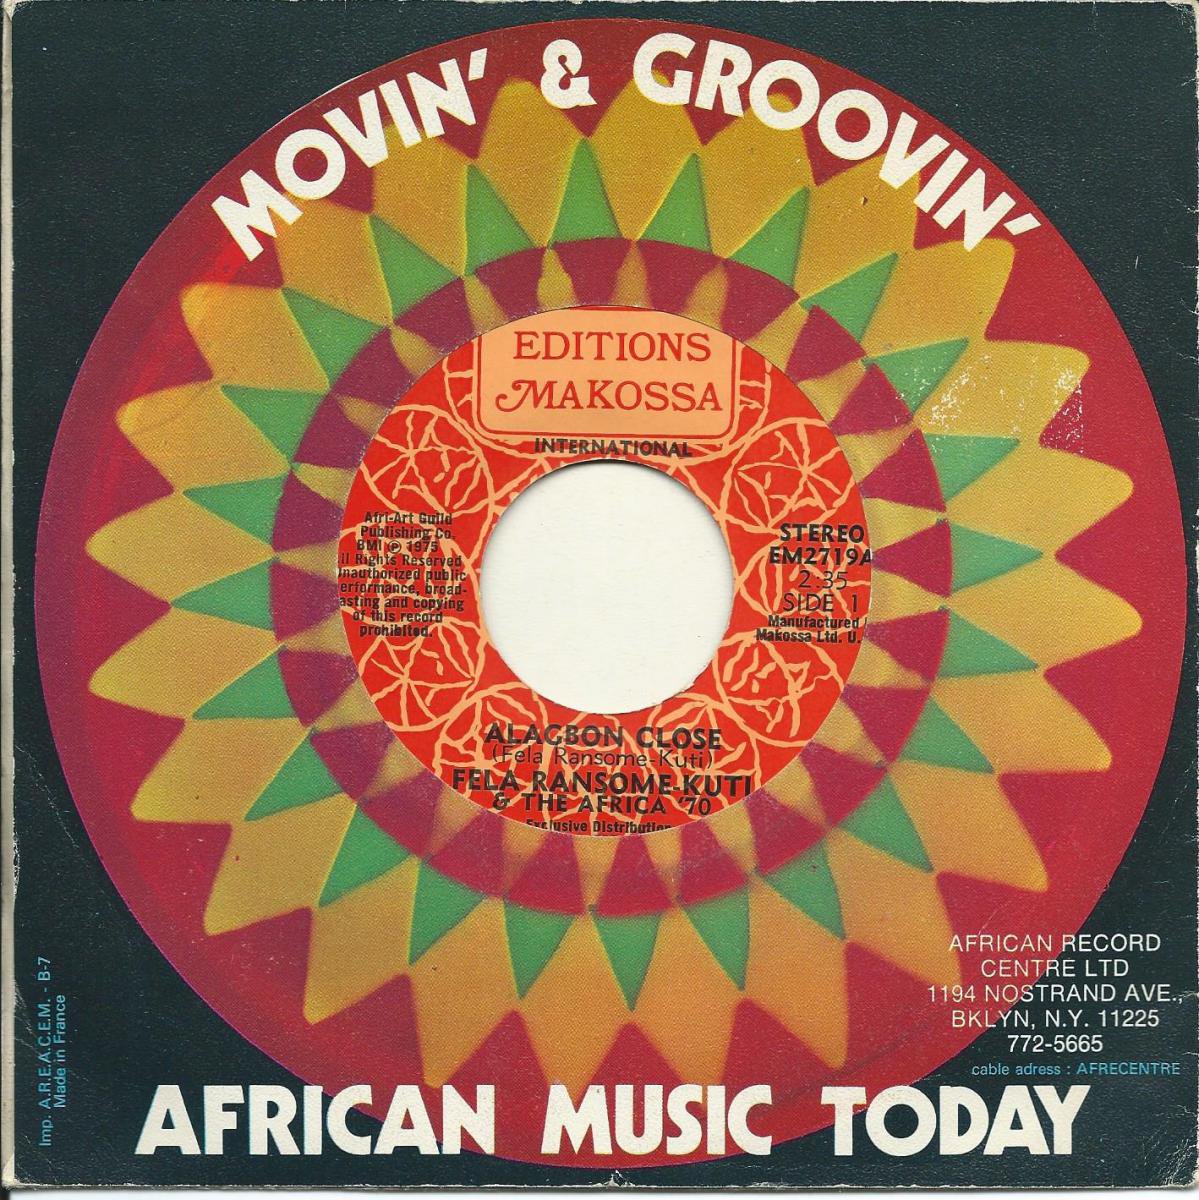 FELA RANSOME KUTI & THE AFRICA '70 / ALAGBON CLOSE (7